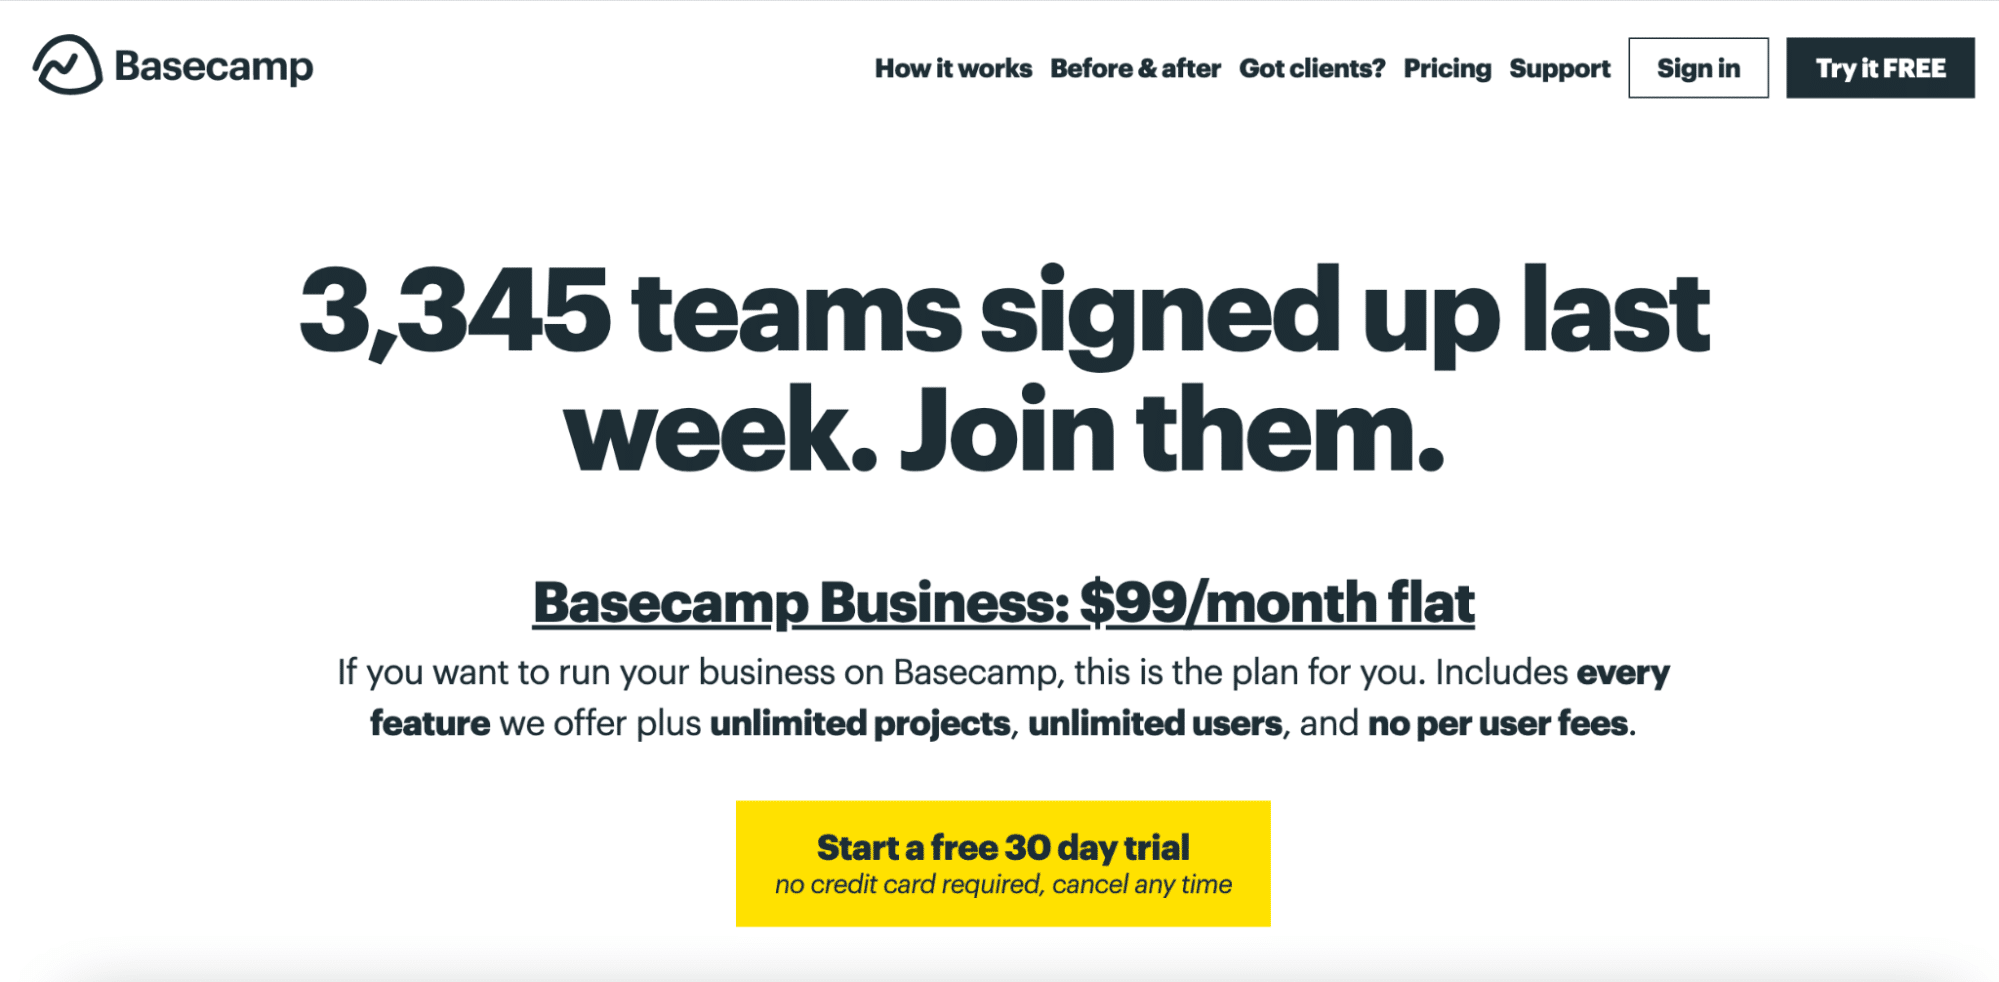 Basecamp pricing